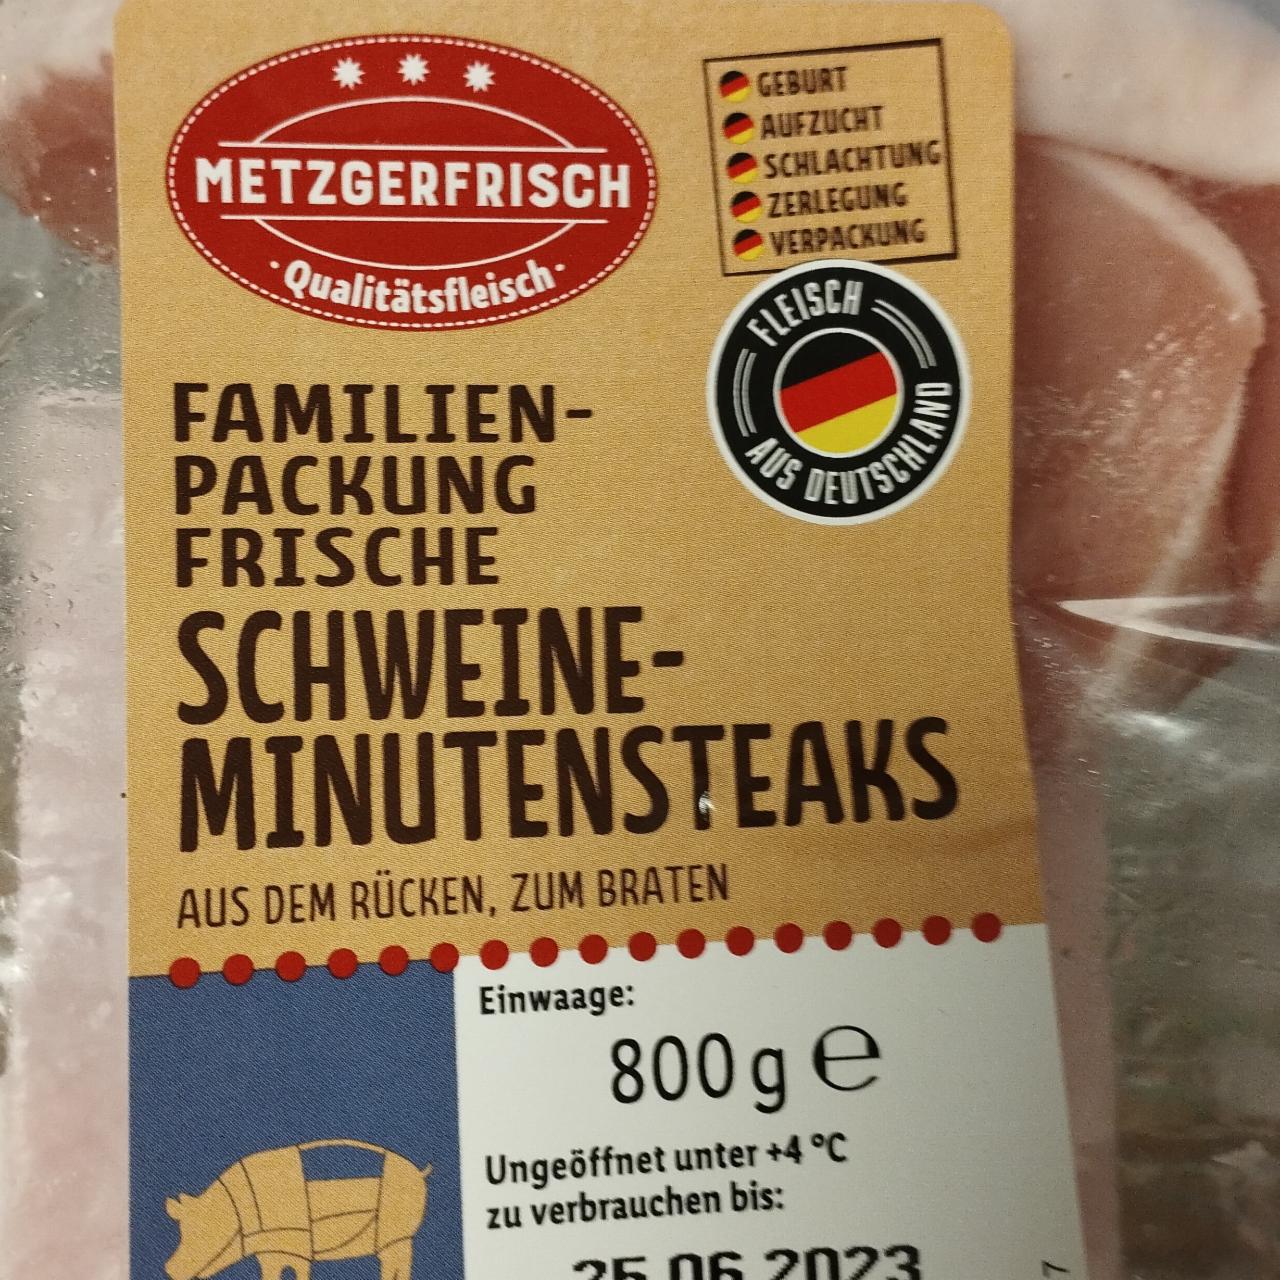 - калорійність, харчова frische ⋙TablycjaKalorijnosti Metzgerfrisch Familien-packung schweine цінність minutensteaks